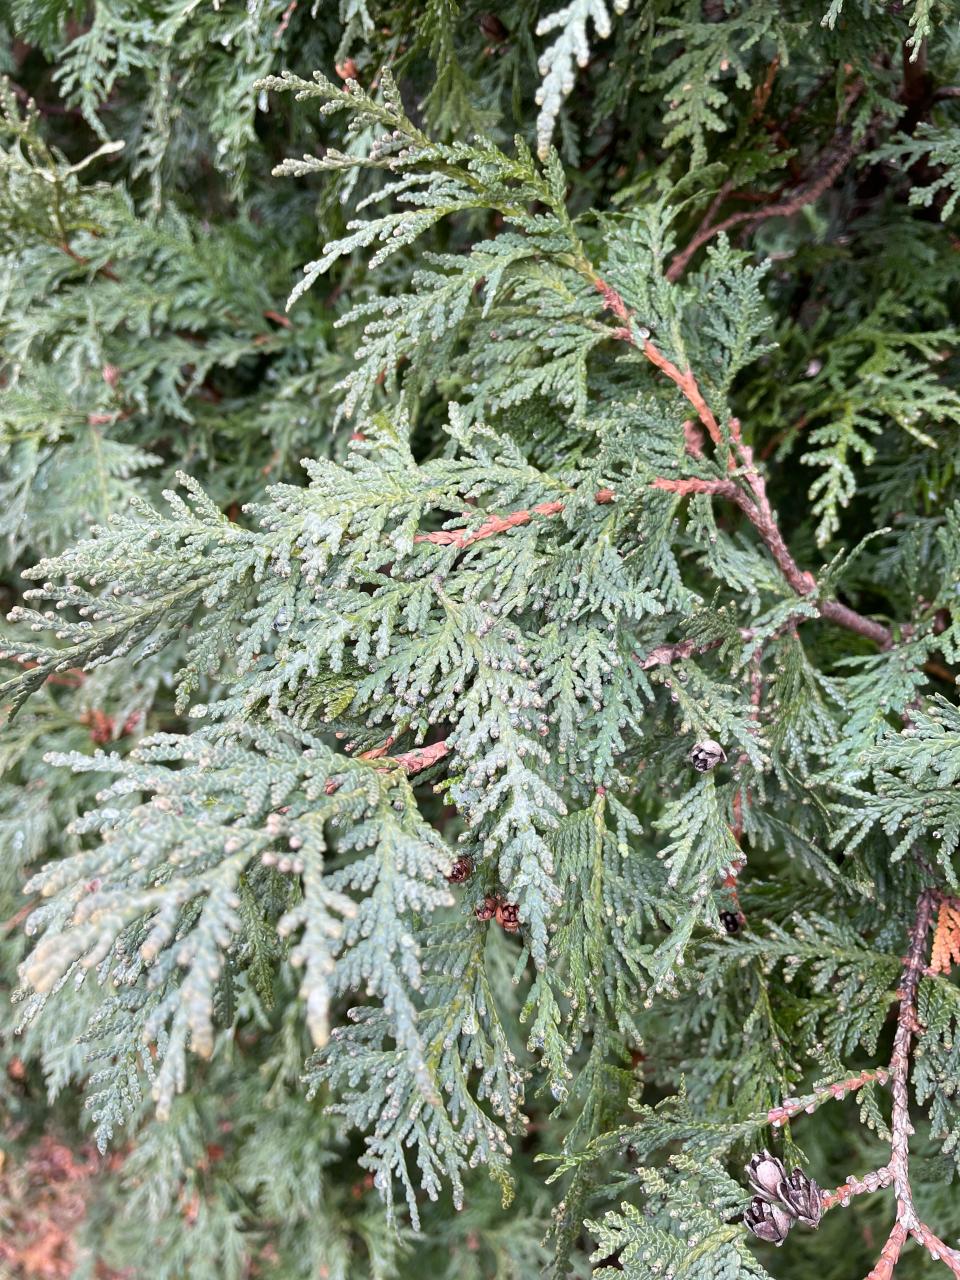 A close-up of the foliage